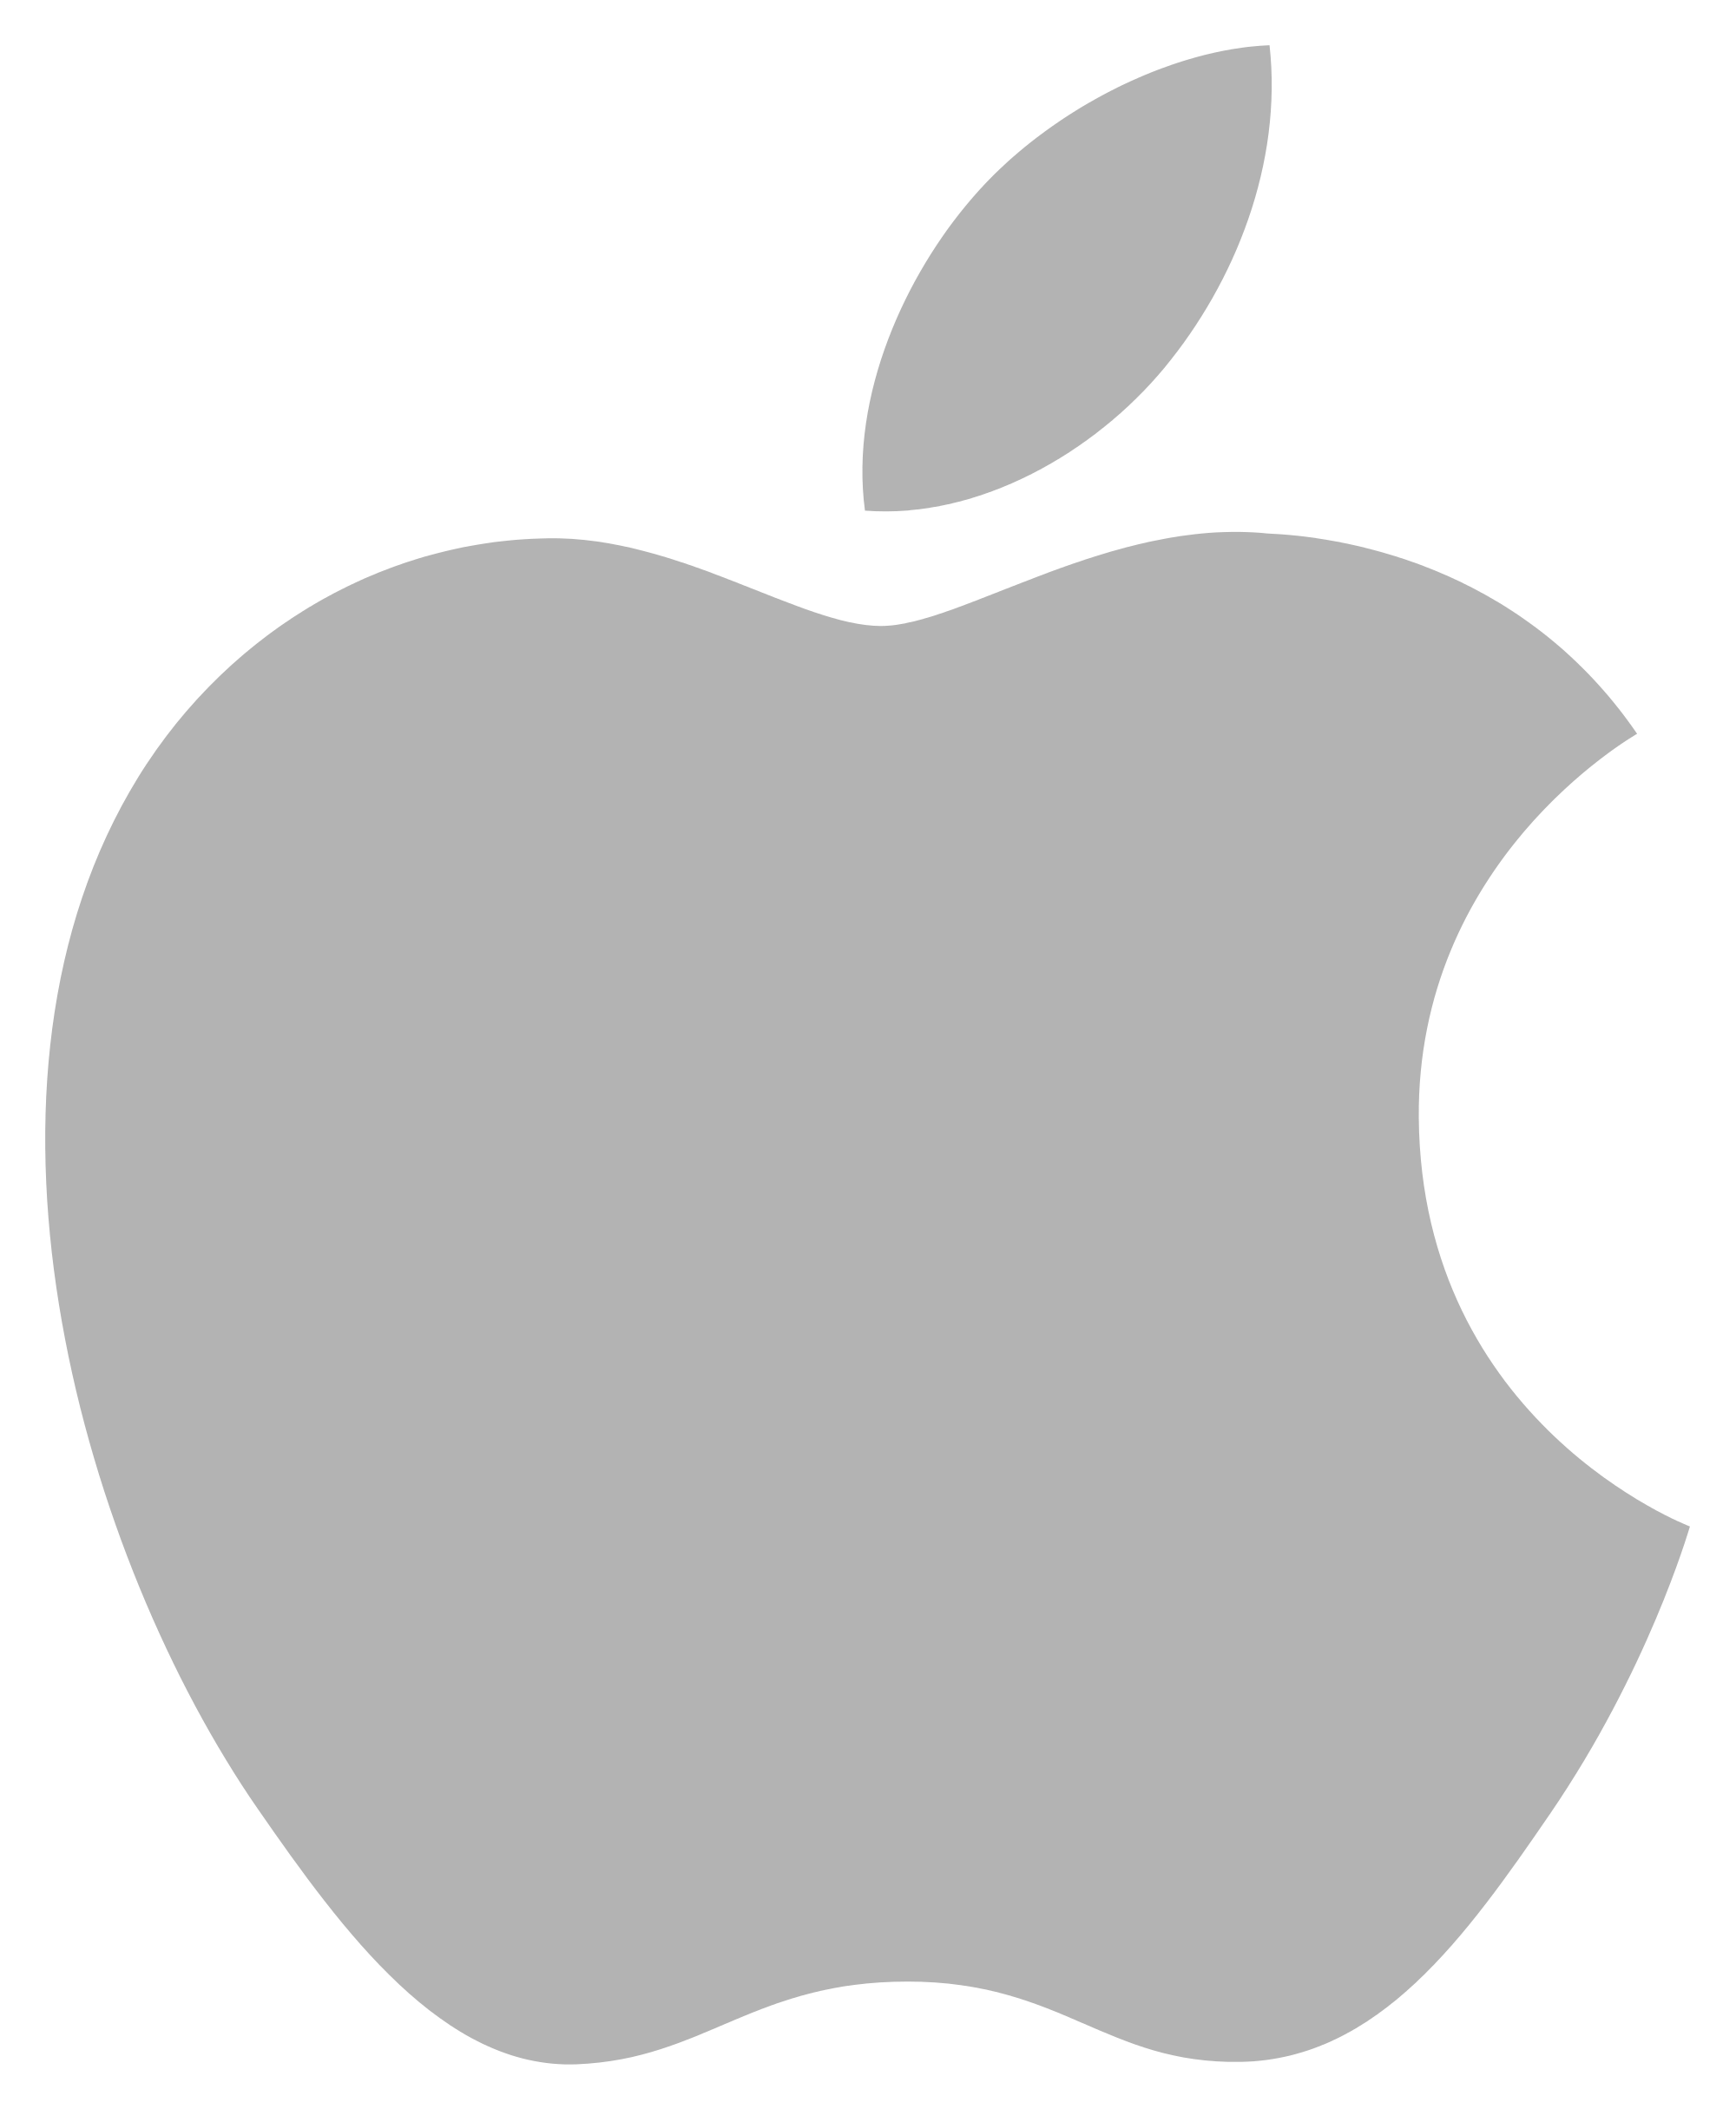 Kalmuri 3.5 for apple download free